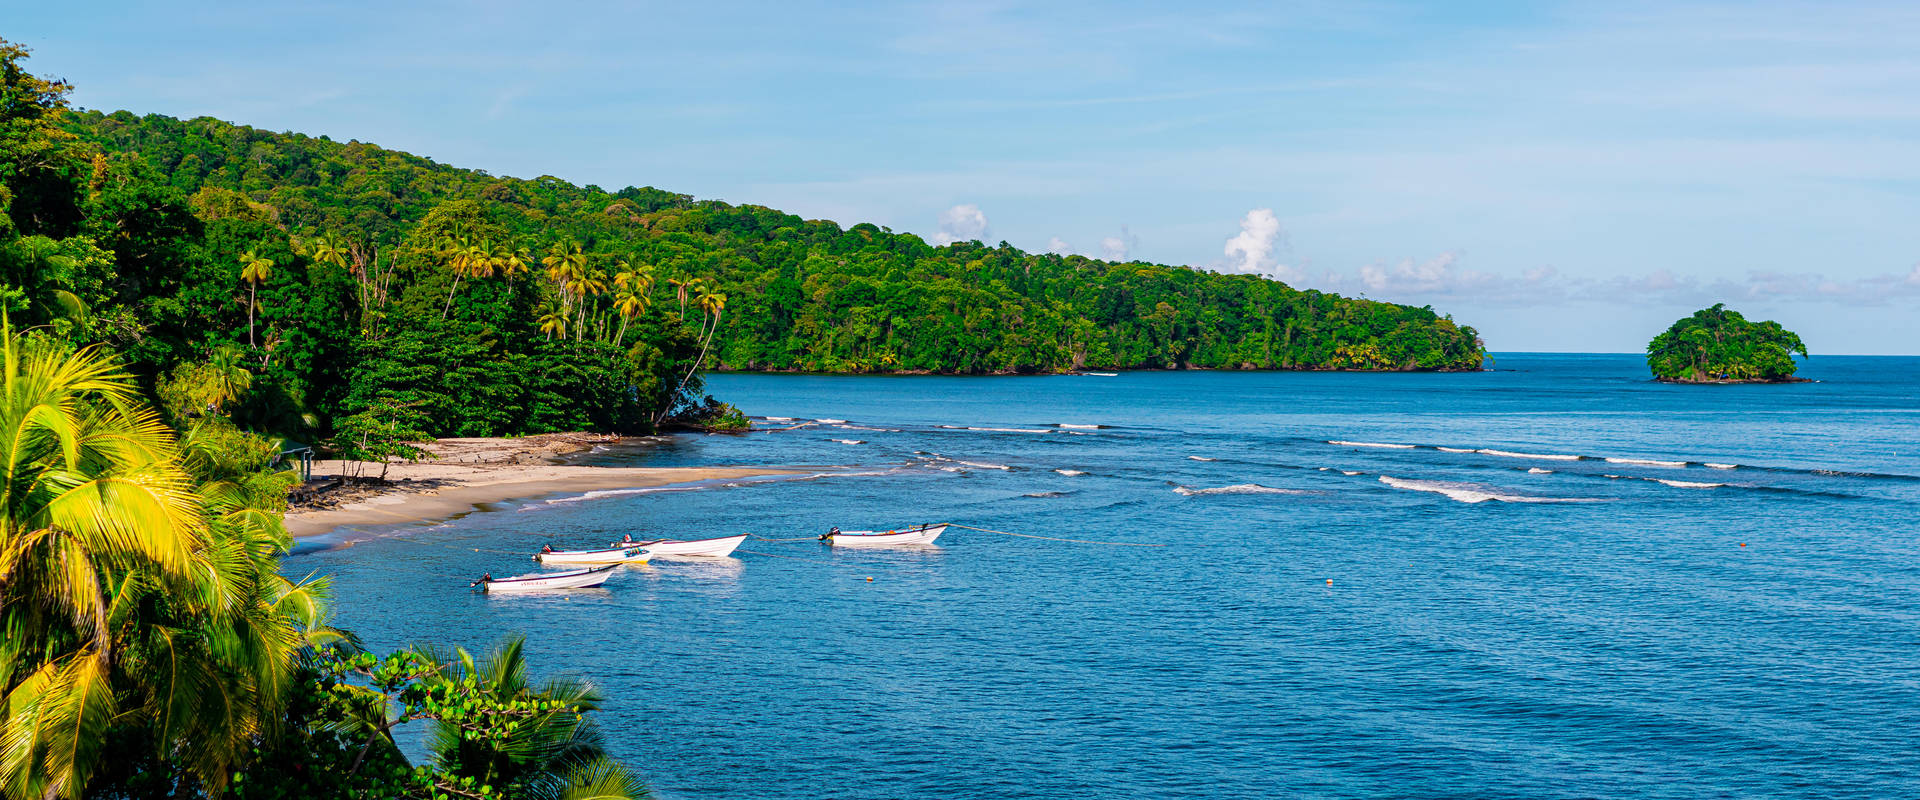 Trinidad And Tobago Salybia Bay Background